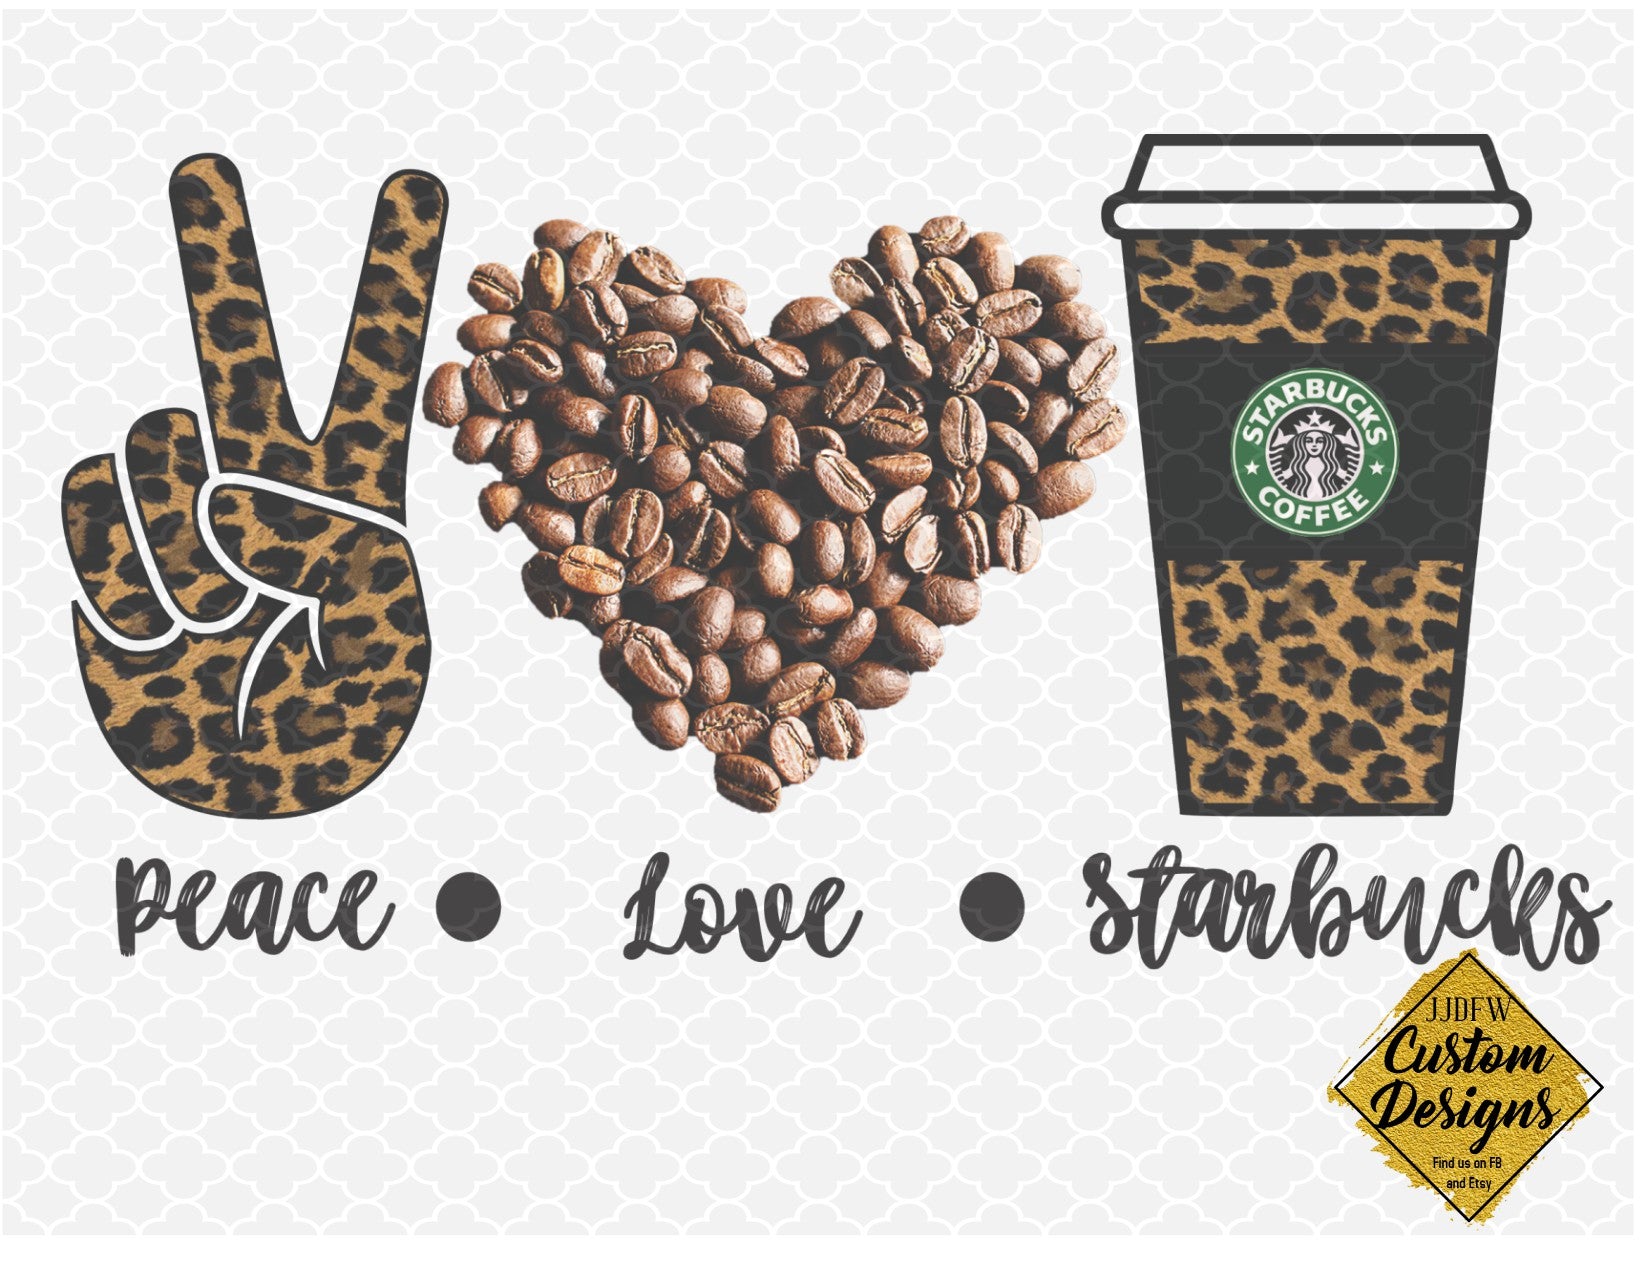 Download Peace Love Starbucks Sublimation Transfer Jjdfw Custom Designs